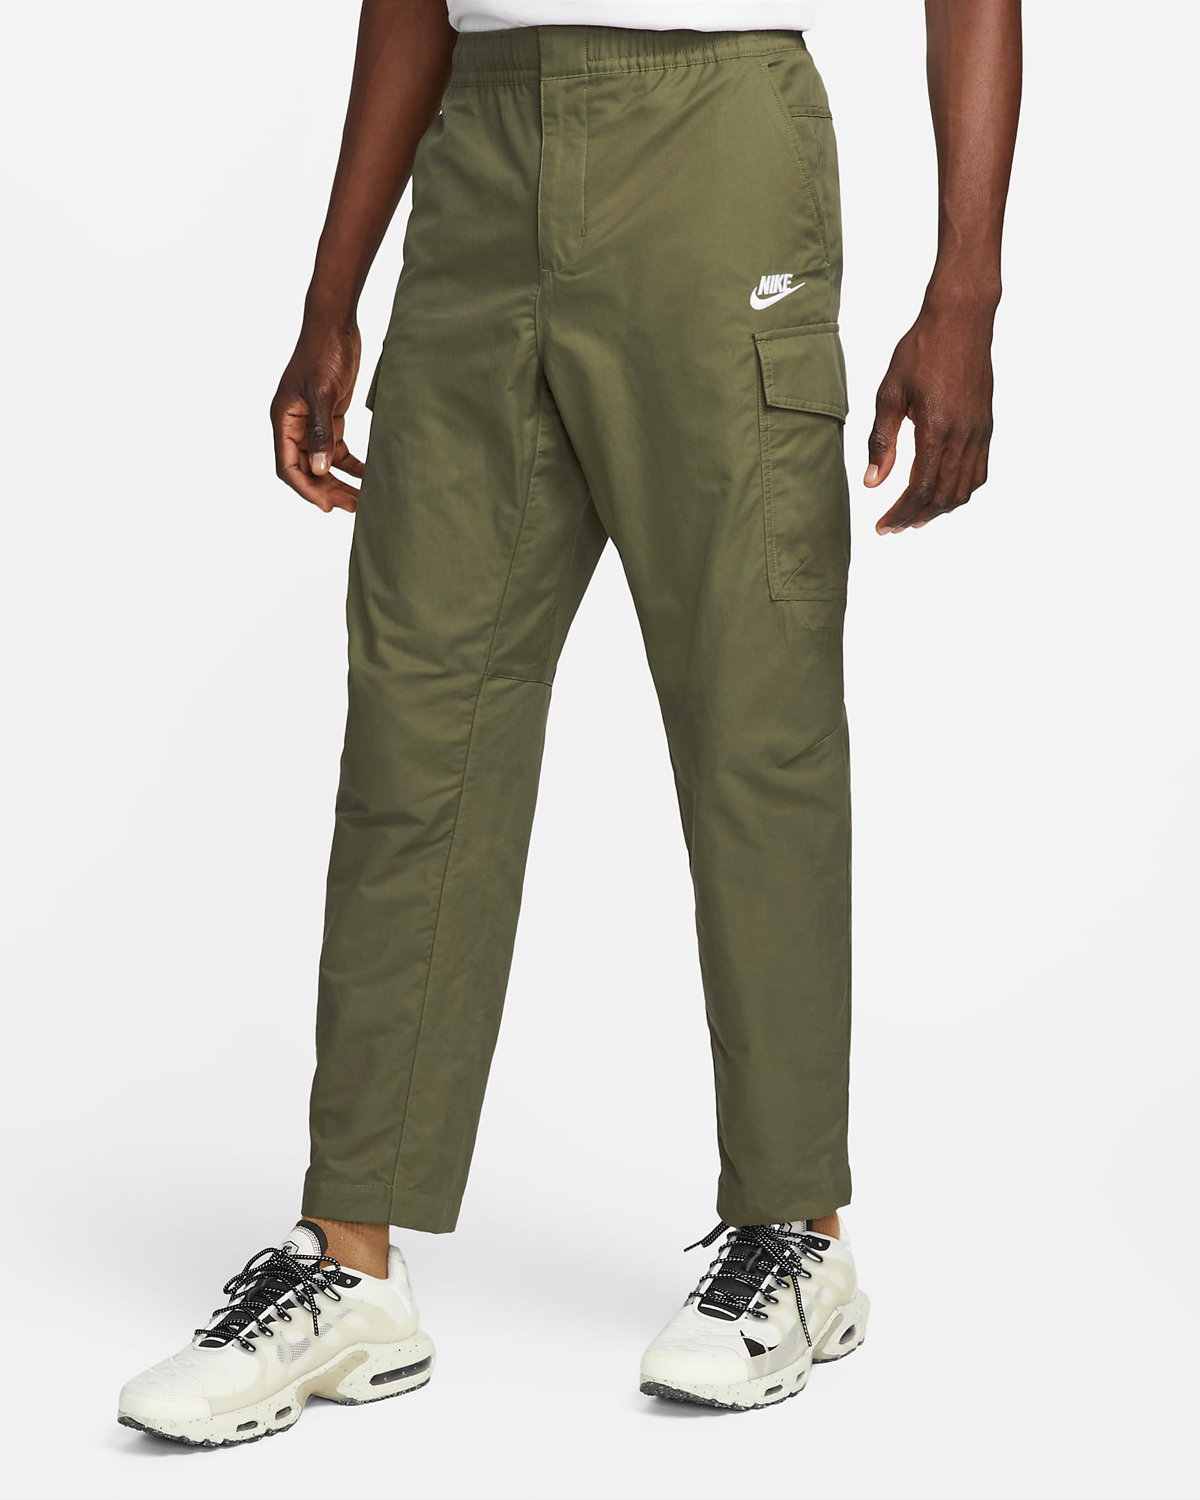 Nike-Cargo-Pants-Olive-Green-1